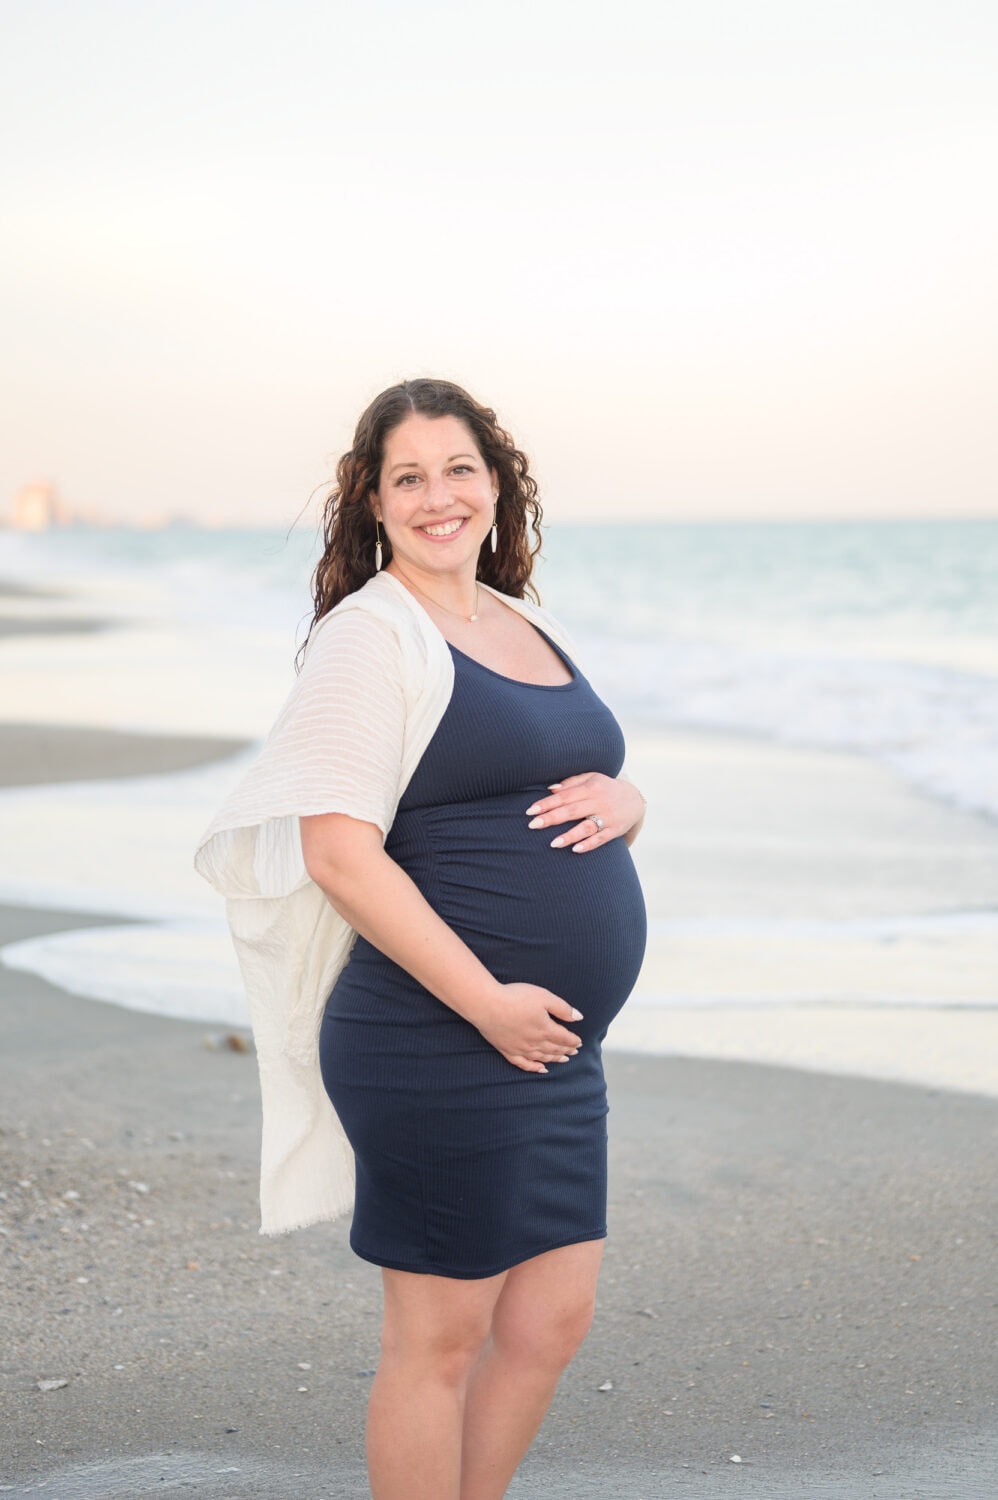 Maternity portrait by the ocean - Island Vista Resort - Myrtle Beach